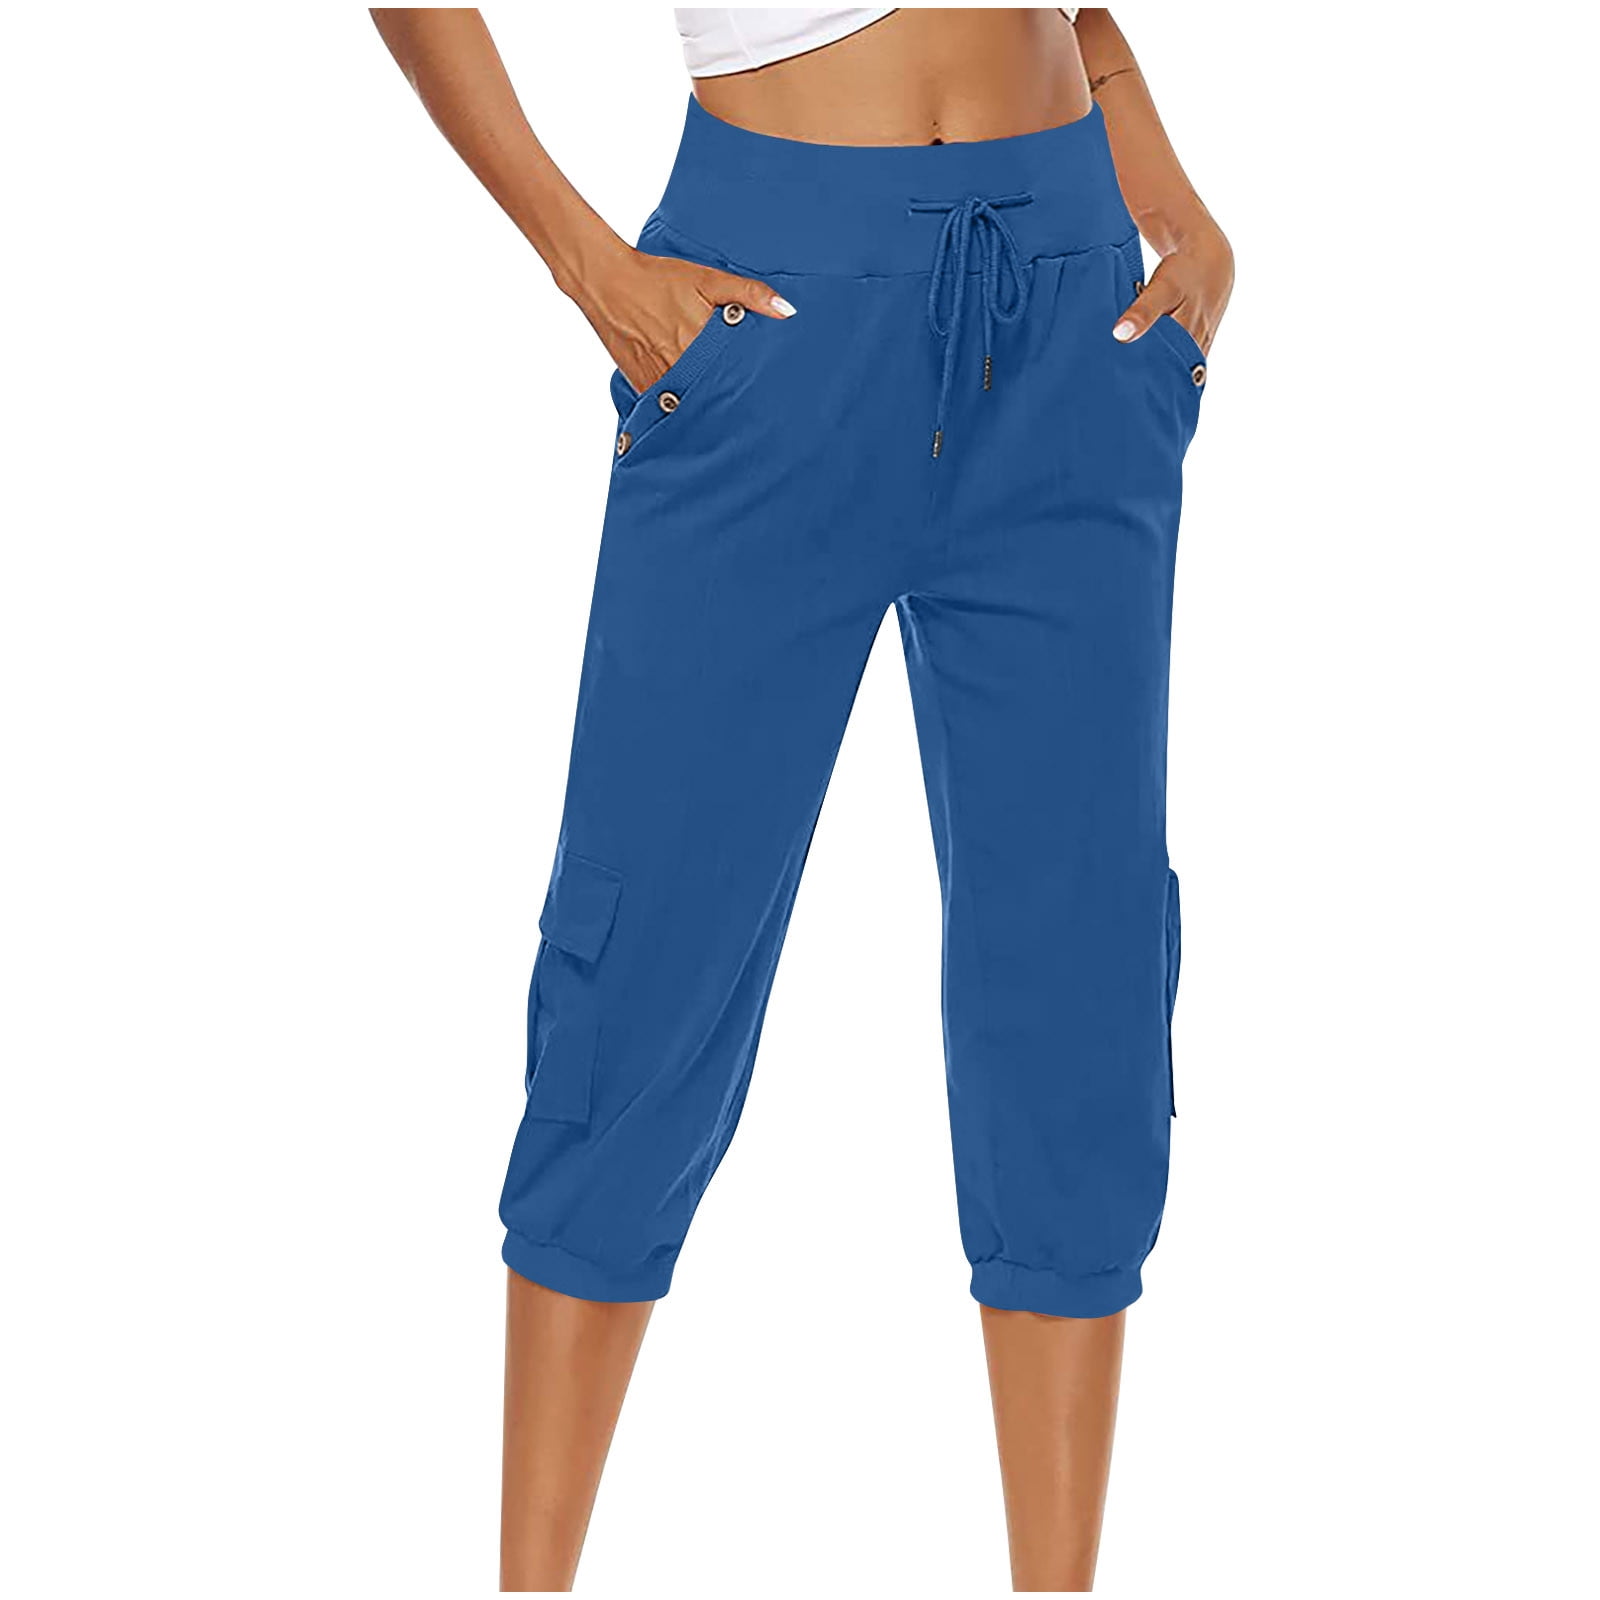 RYRJJ Women's Linen High Waist Pants Drawstring Cargo Capris Pants with 4  Pockets Casual Wide Leg Workour Yoga Cropped Pants(Blue,S)